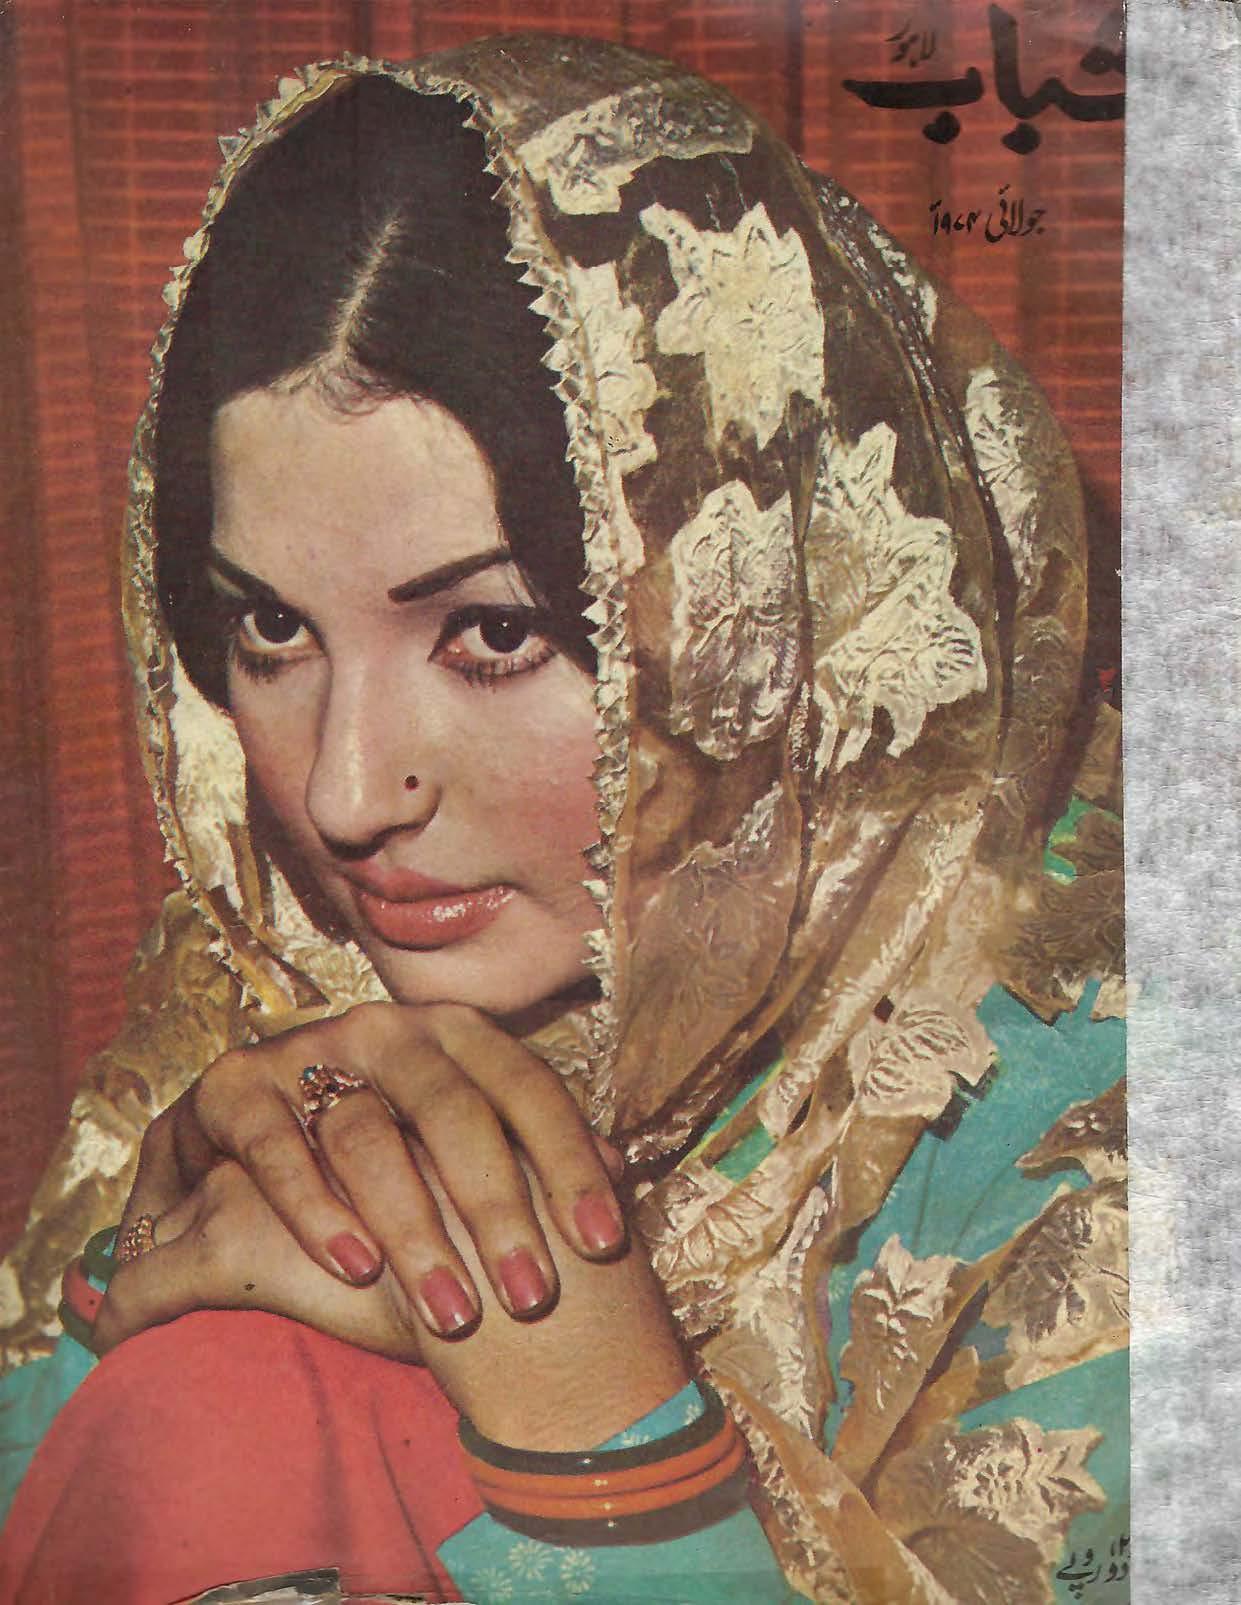 Shabab (Jul, 1974)